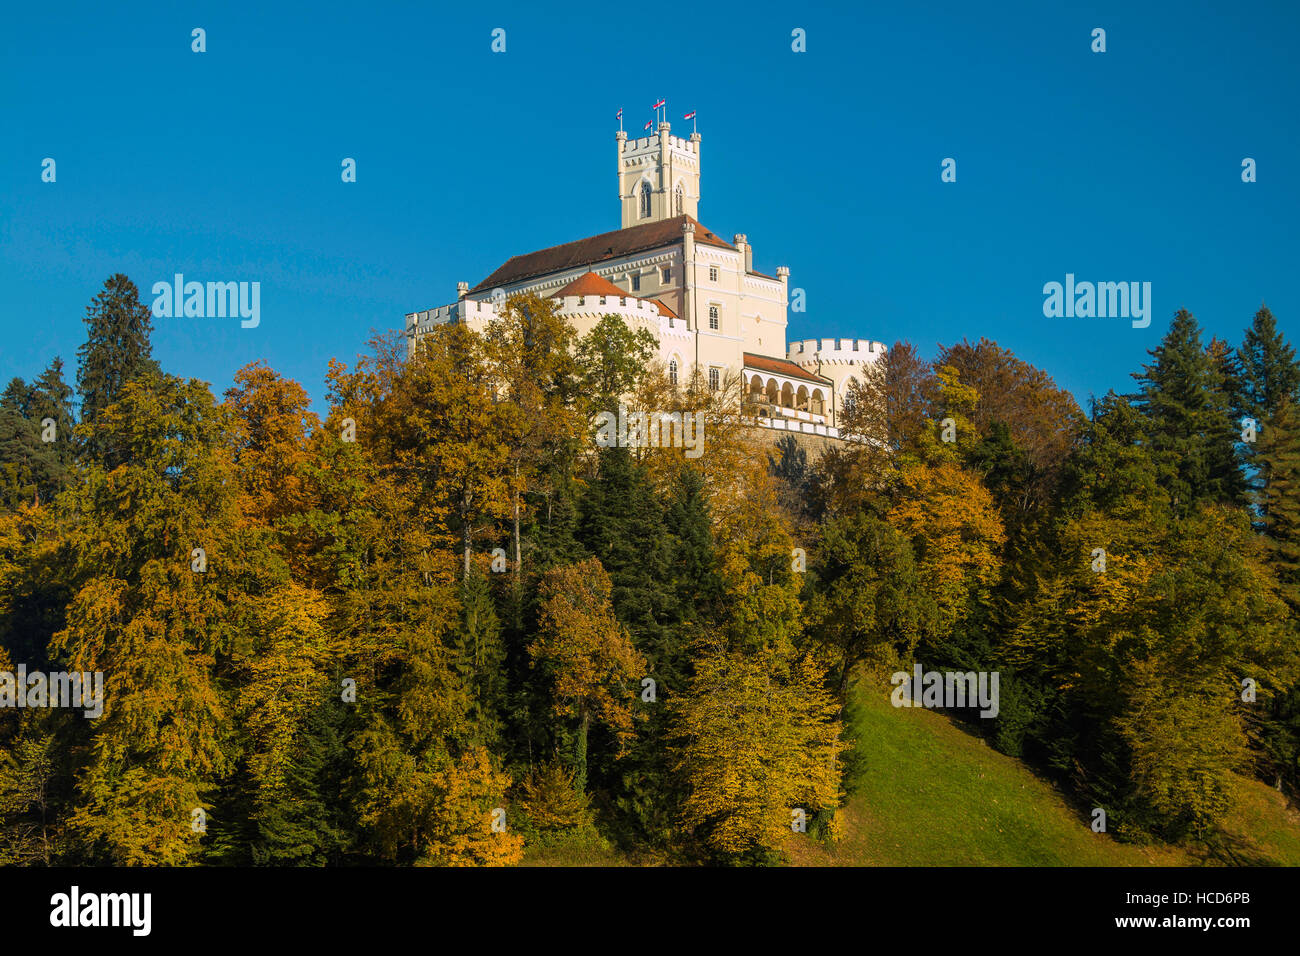 Castle of Trakoscan on the hill in autumn, Zagorje, Croatia Stock Photo